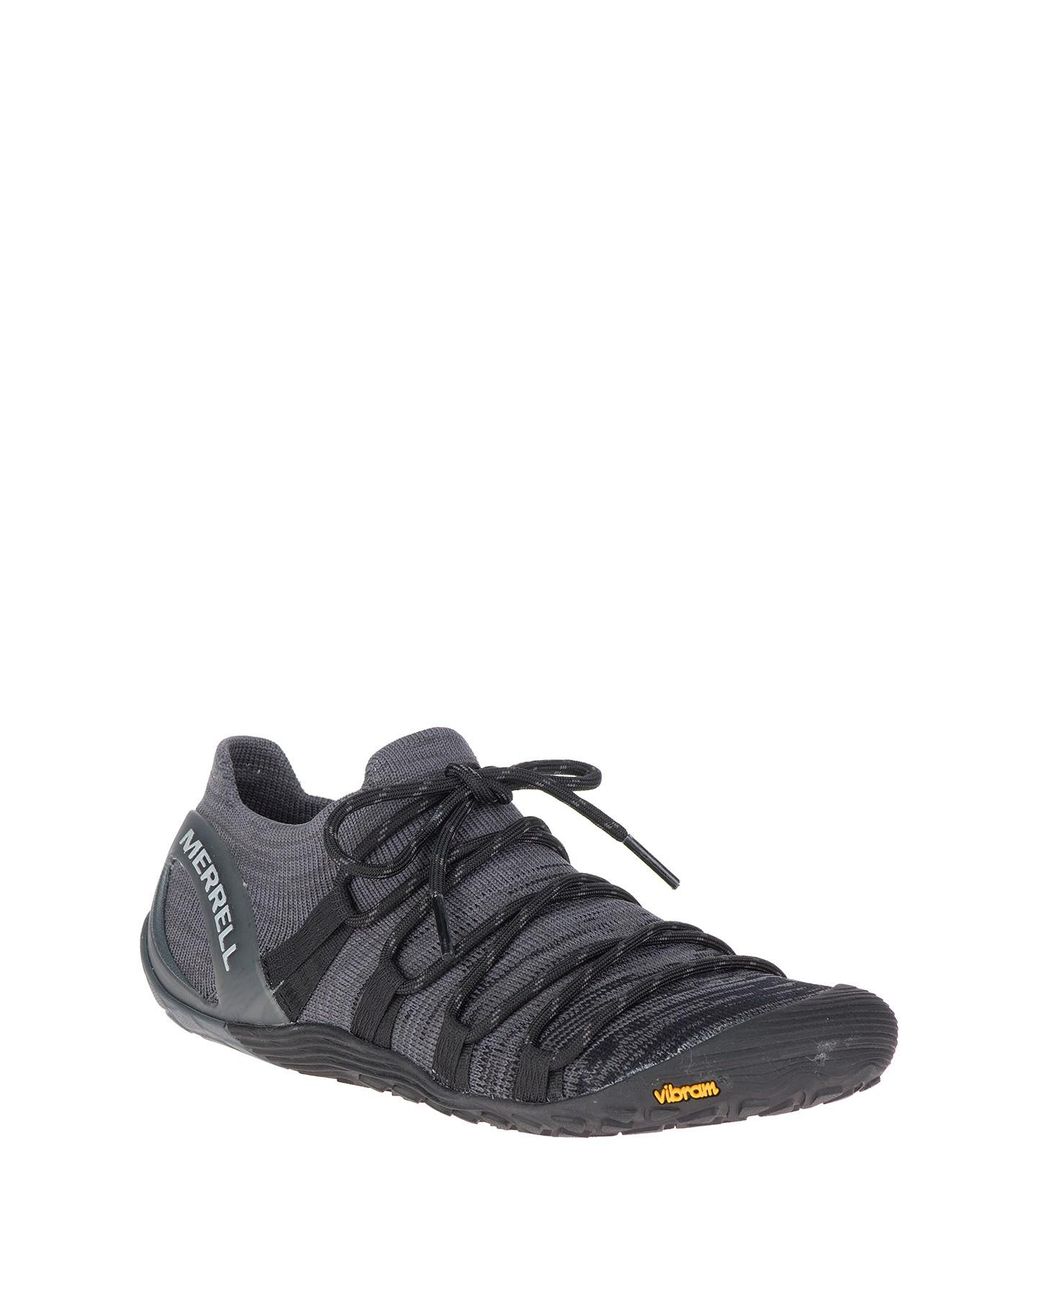 Merrell Vapor Glove 4 3d Fitness Shoes in Black | Lyst